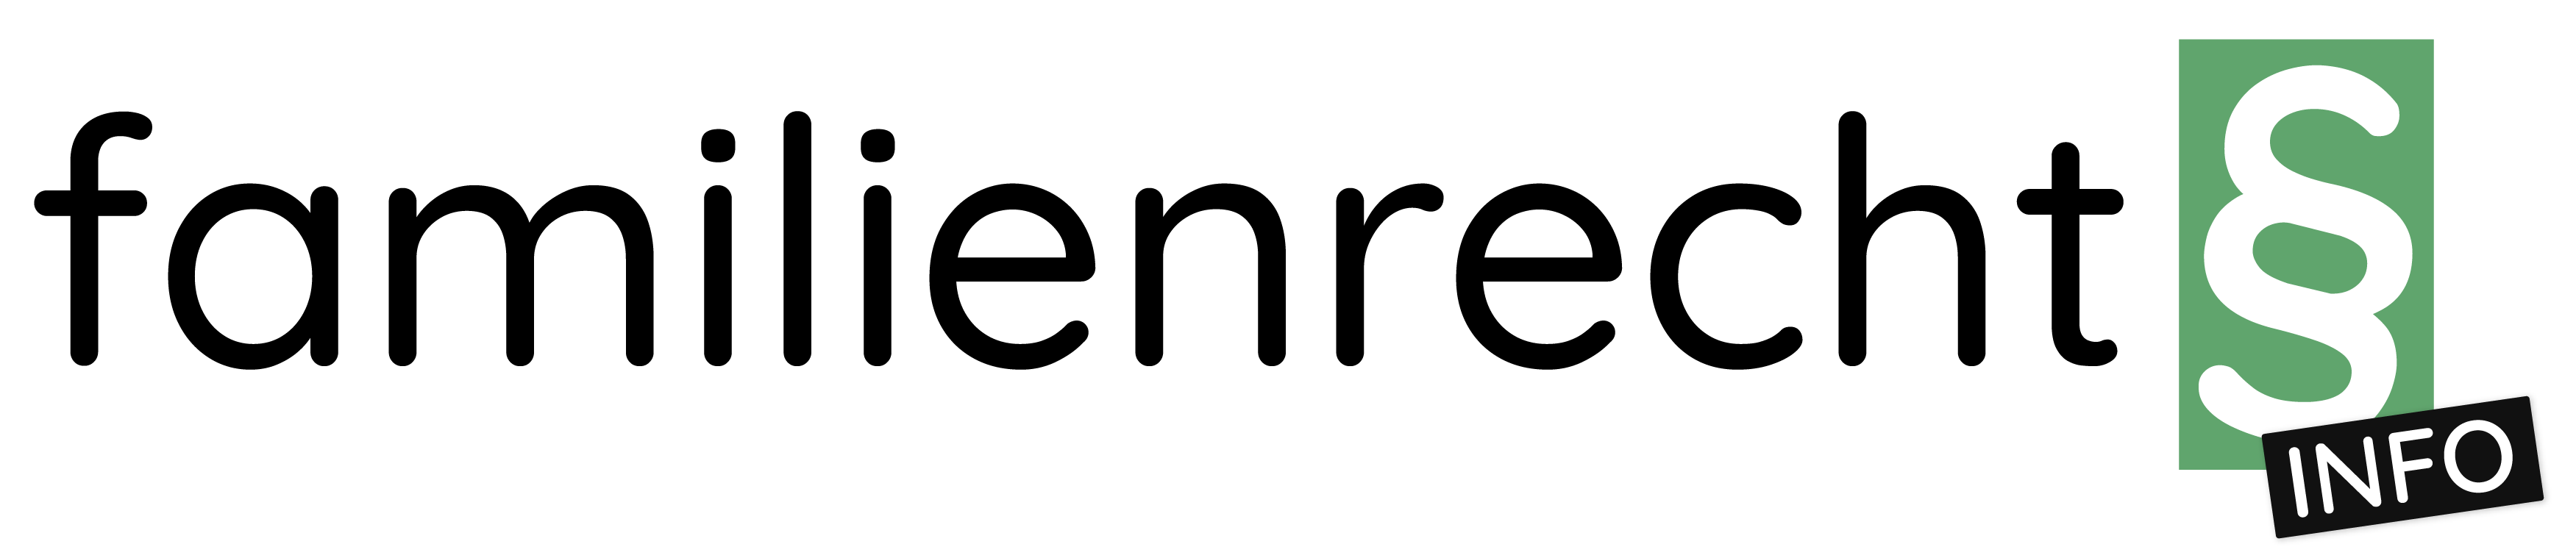 Familienrechtsinfo Logo - retina